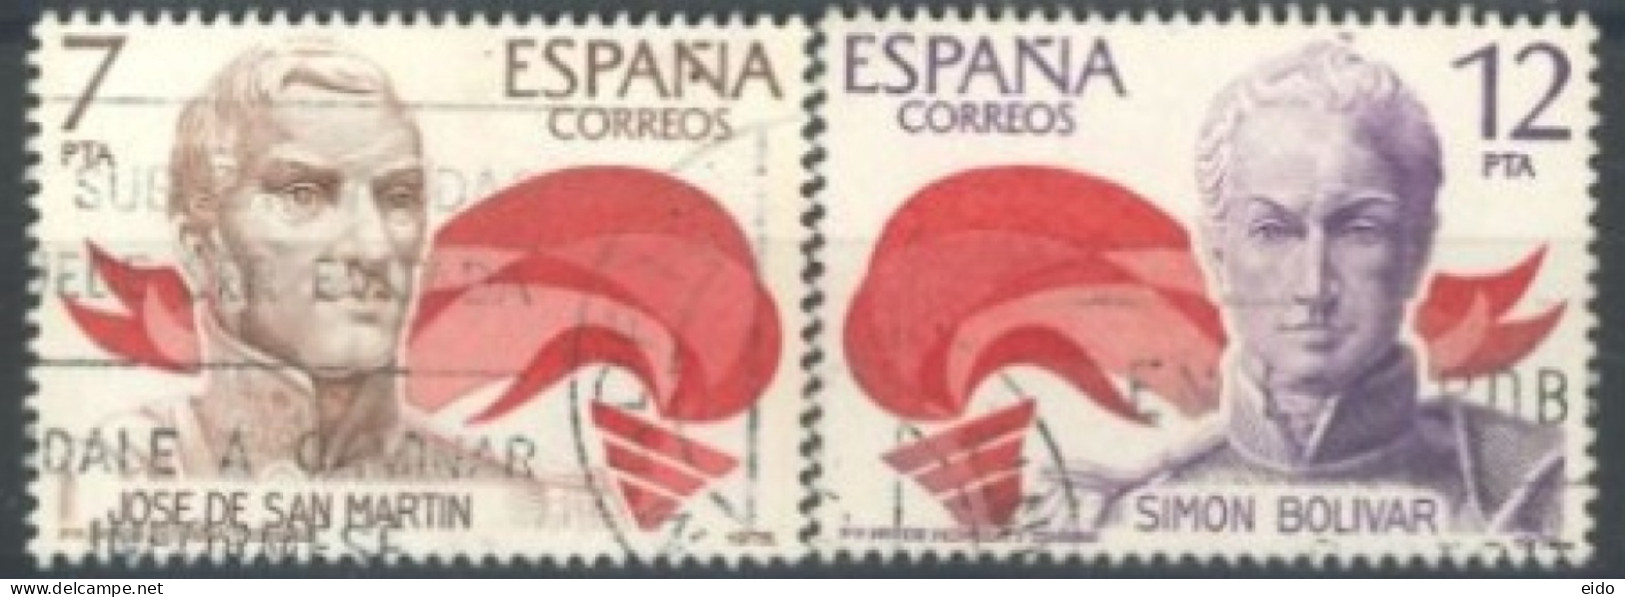 SPAIN, 1978, JOSE DE SAN MARTIN & SIMON BOLIVAR STAMPS COMPLETE SET OF 2, # 2116/17, USED. - Gebruikt